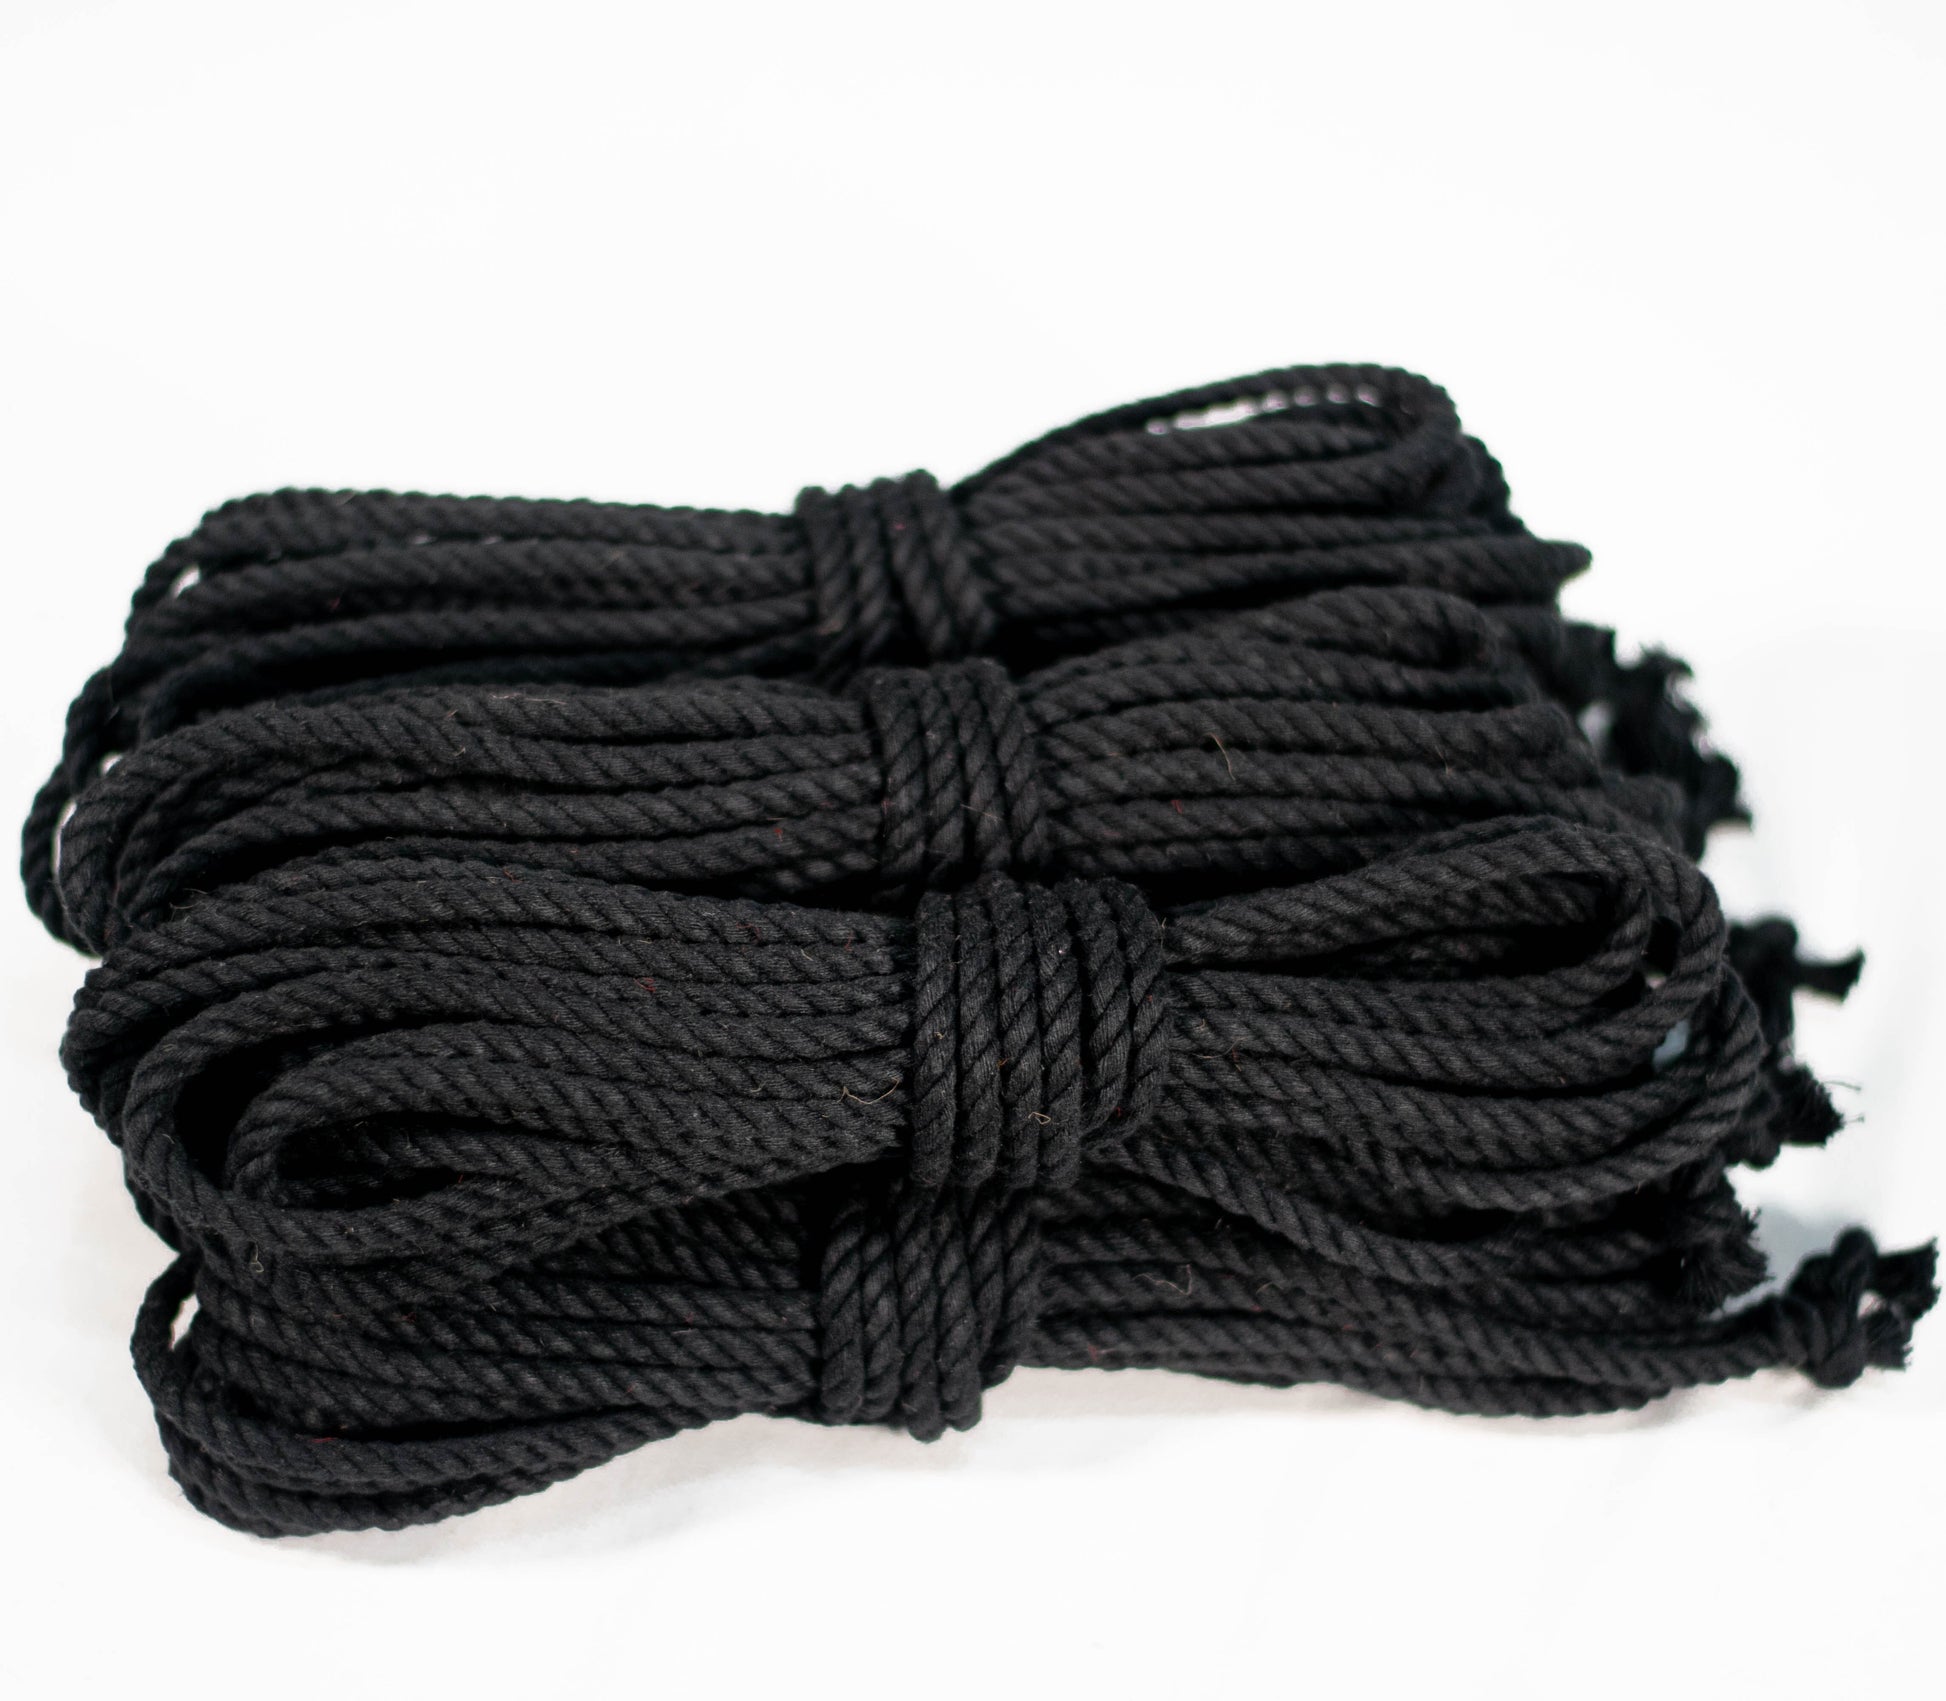 Cotton Play Ropes Shibari Rope black Bundle of 6 